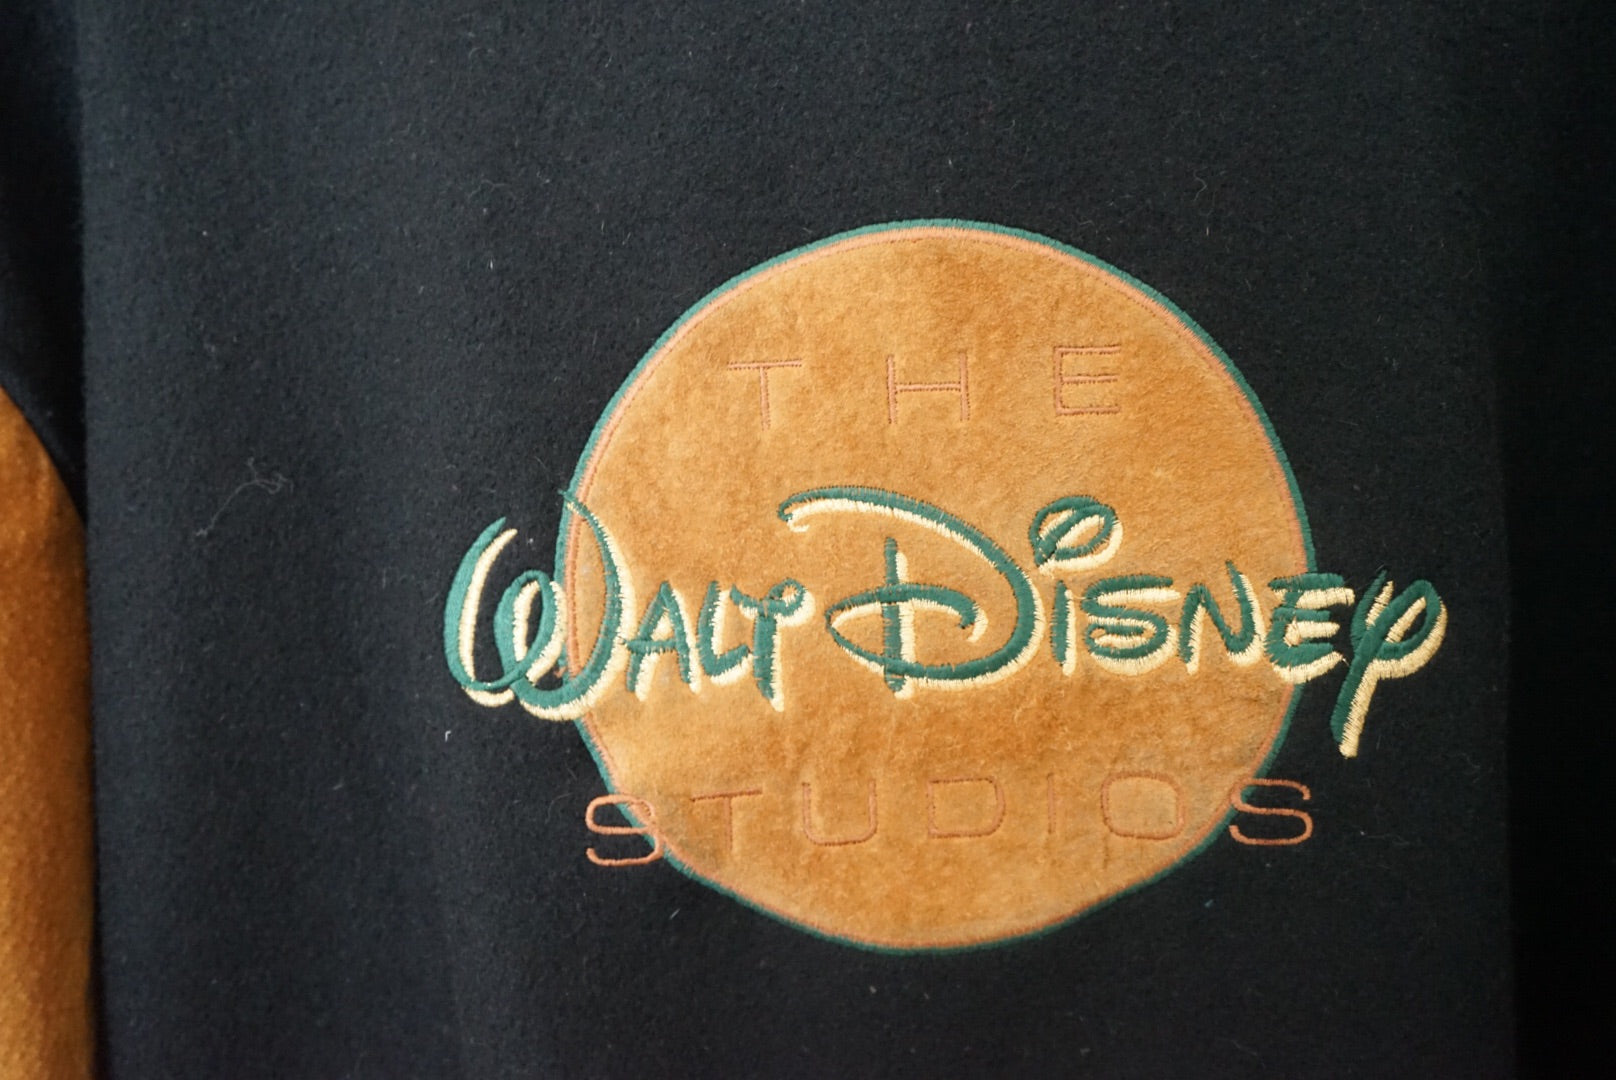 Walt Disney Studios Sueded Varsity Jacket